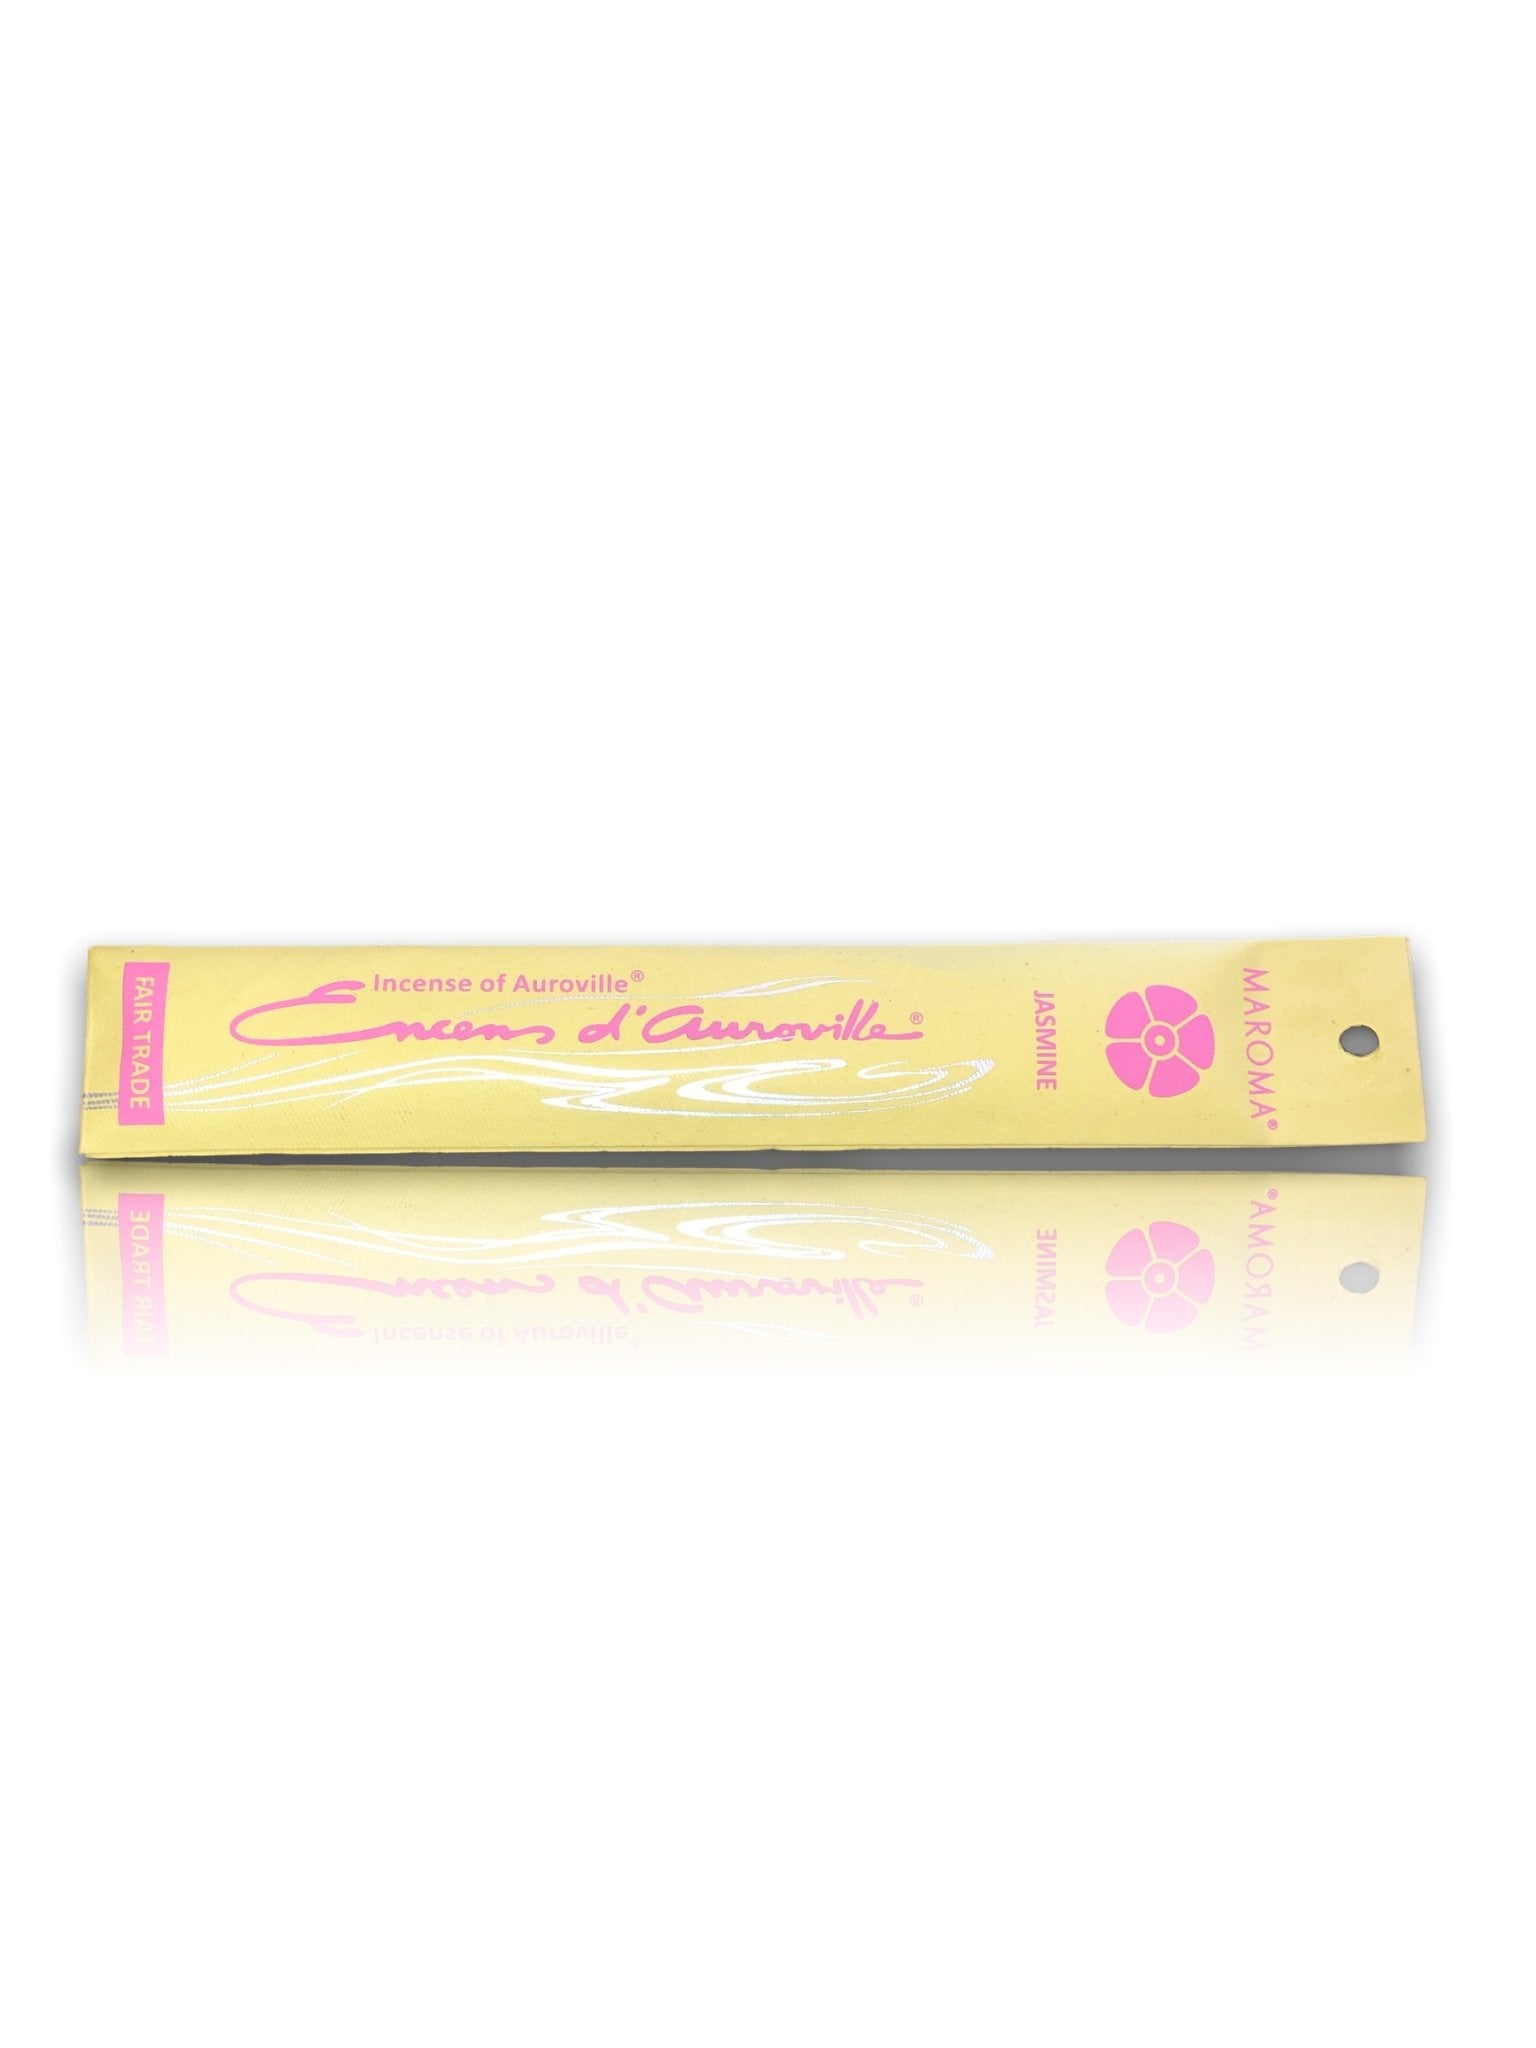 Maroma Jasmine Incense Sticks - 10pack - HealthyLiving.ie